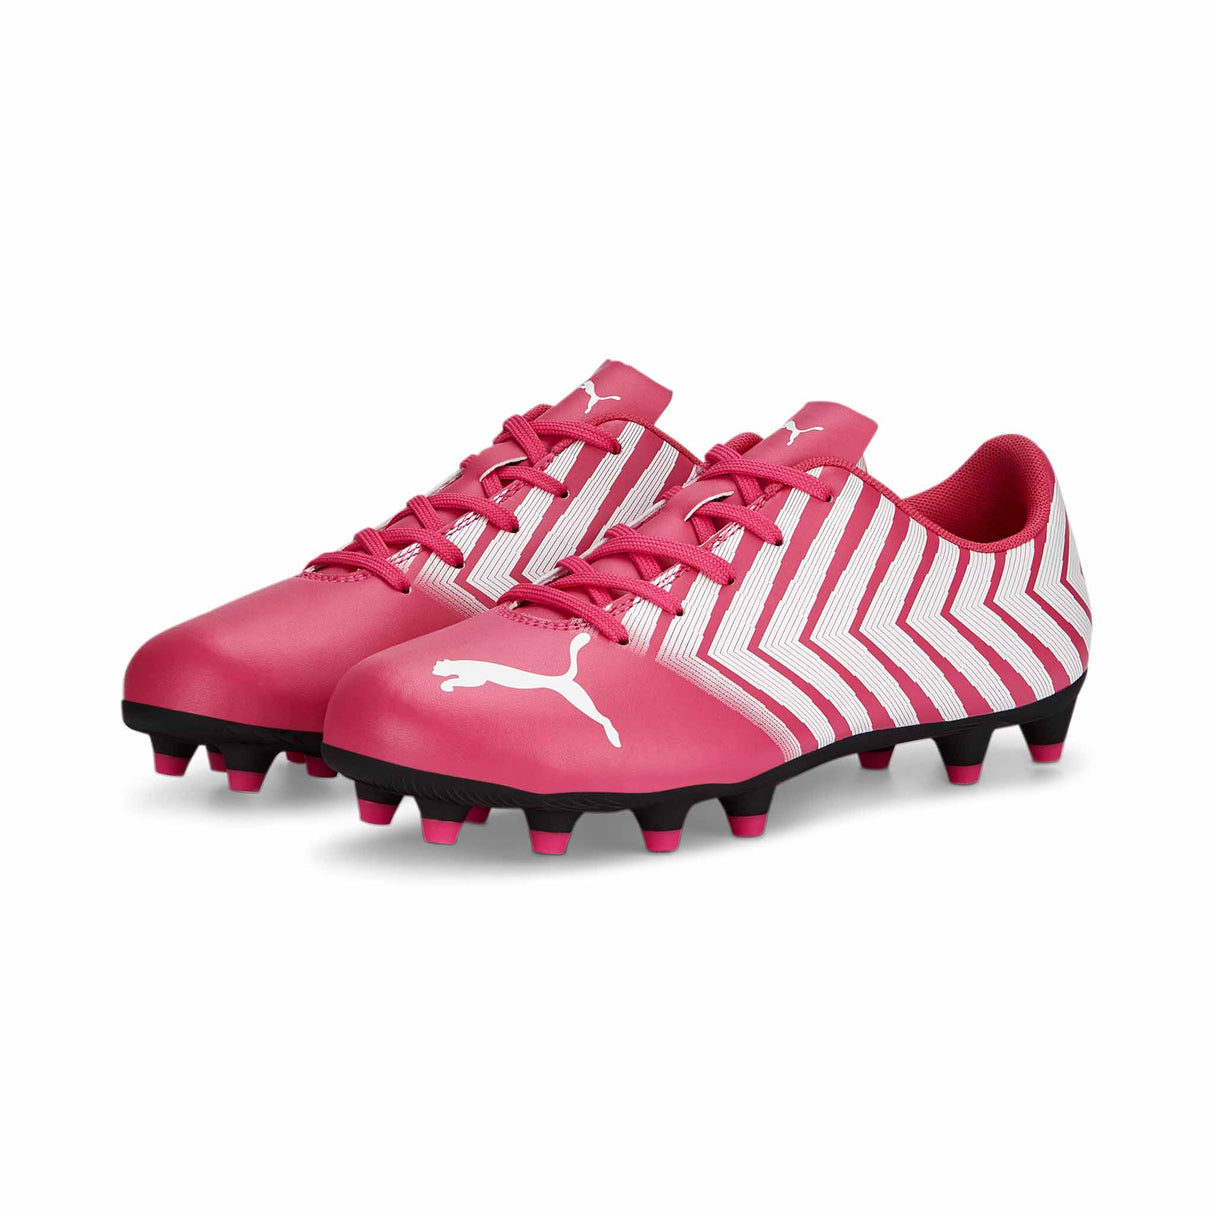 Puma Tacto II FG/AG Junior chaussure de soccer enfant - Rose / Blanc